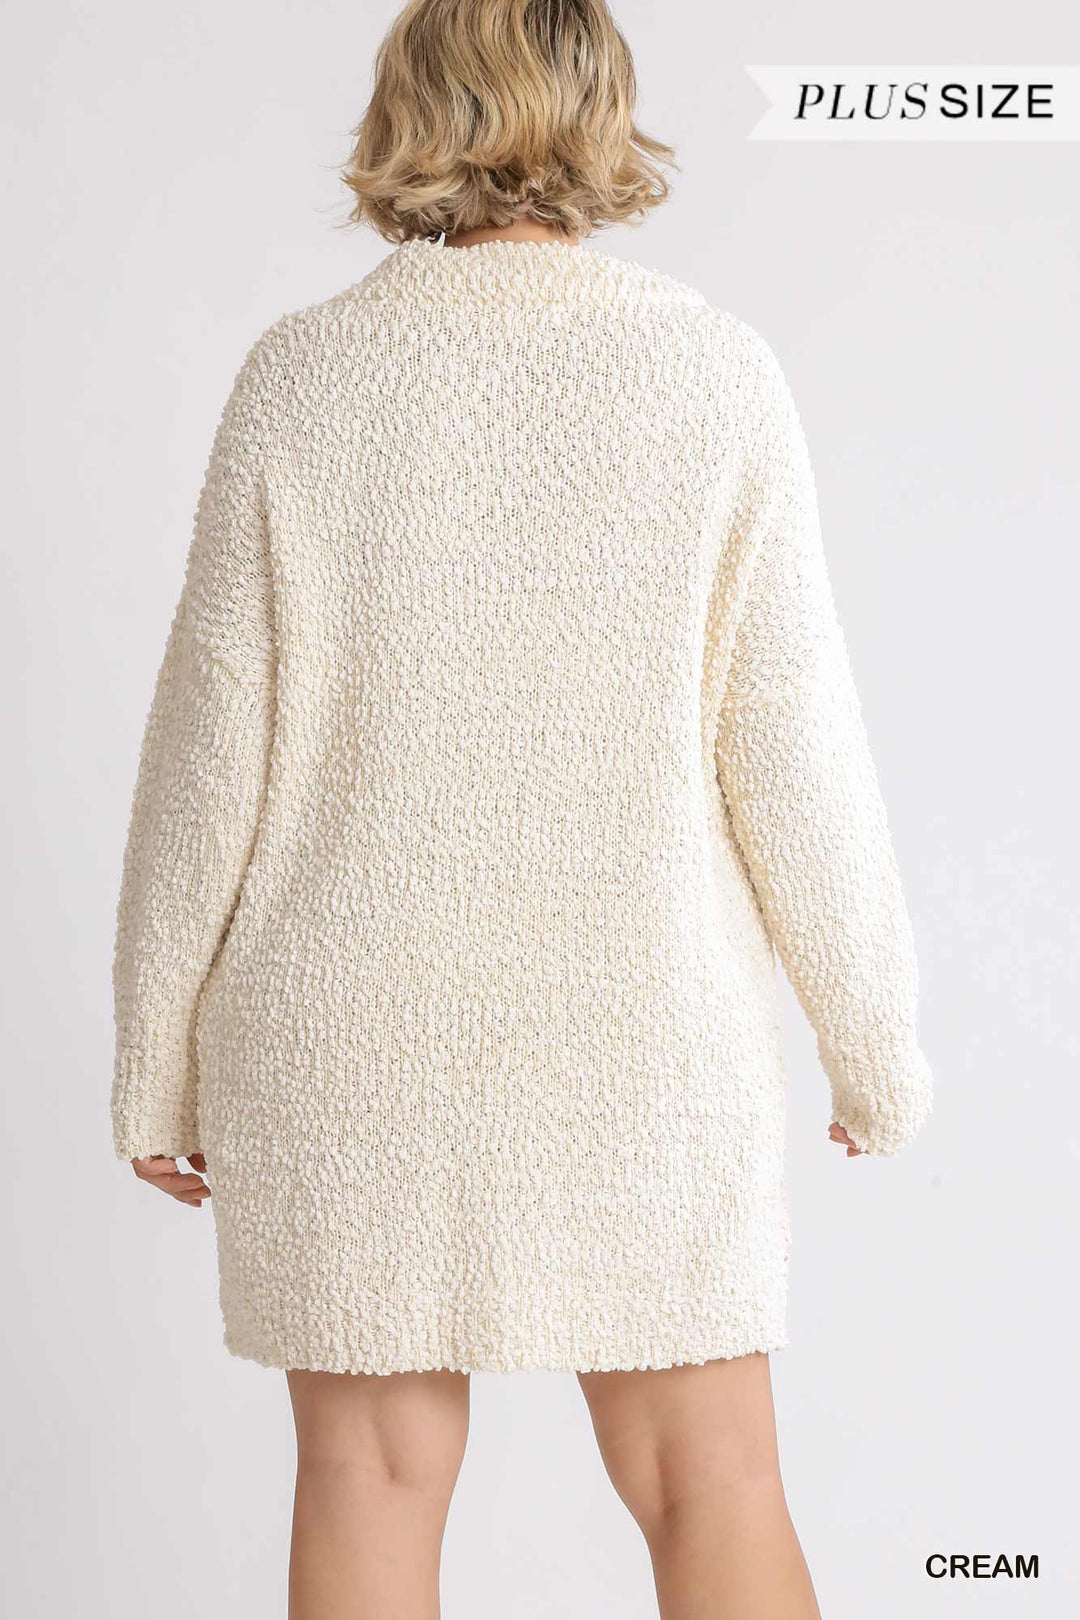 High Cowl Neck Bouclé Long Sleeve Sweater Dress in Cream